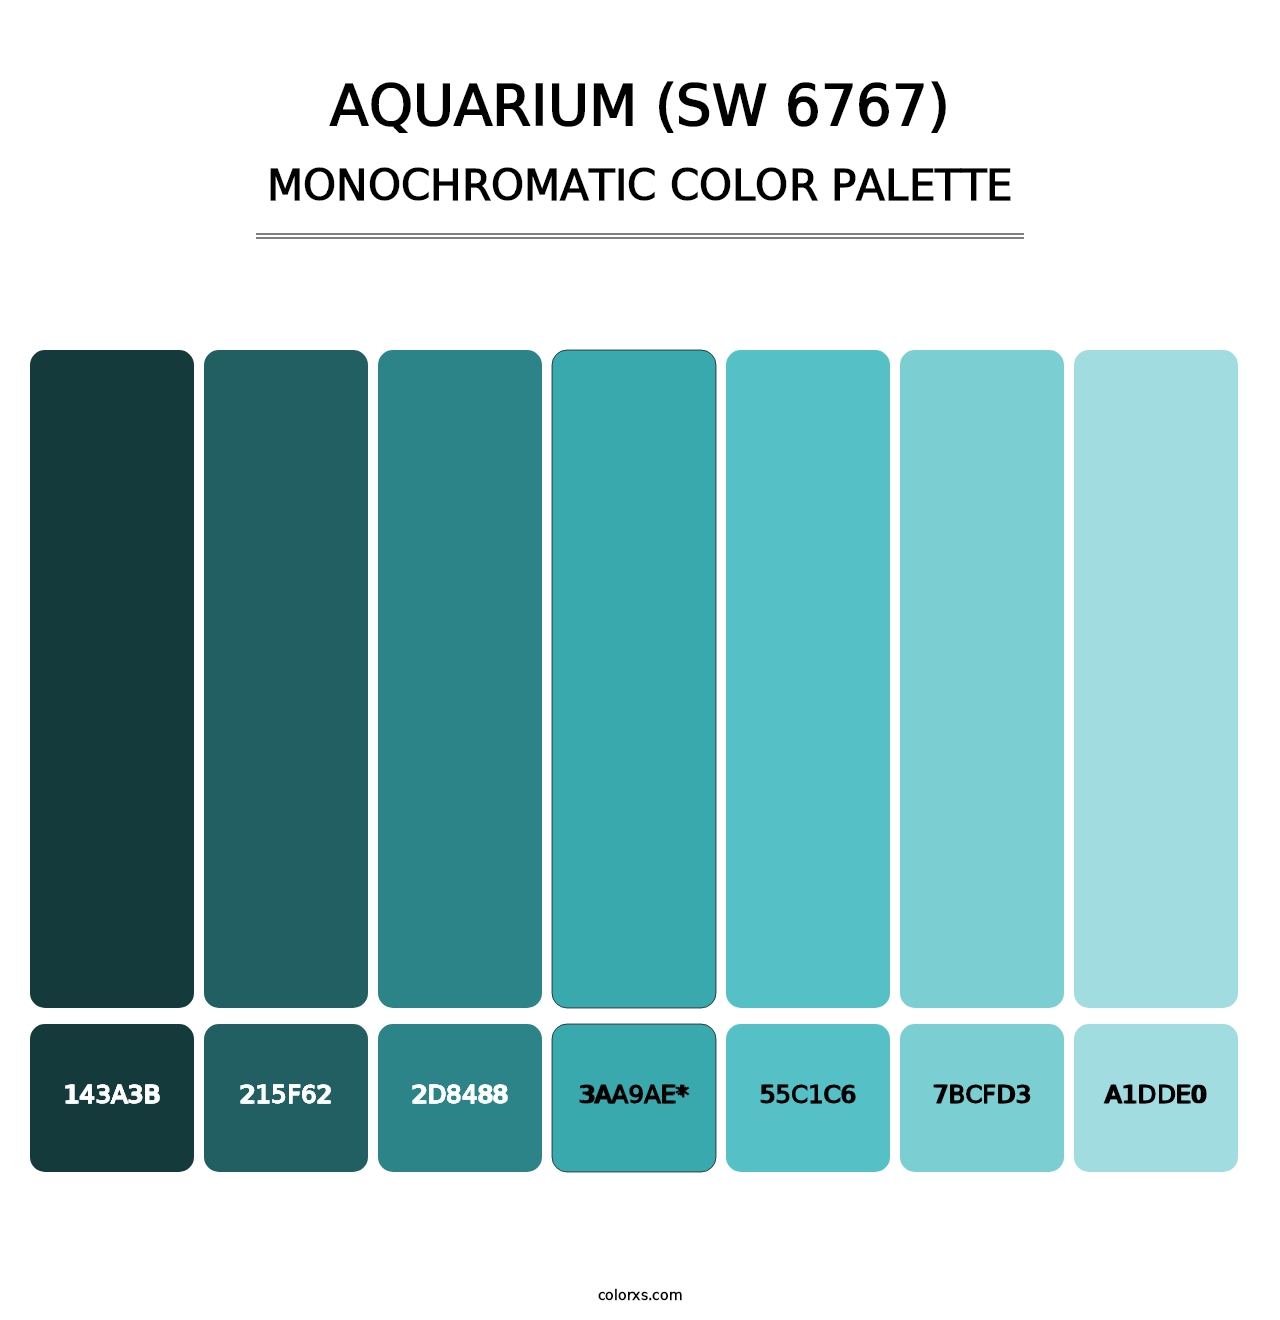 Aquarium (SW 6767) - Monochromatic Color Palette